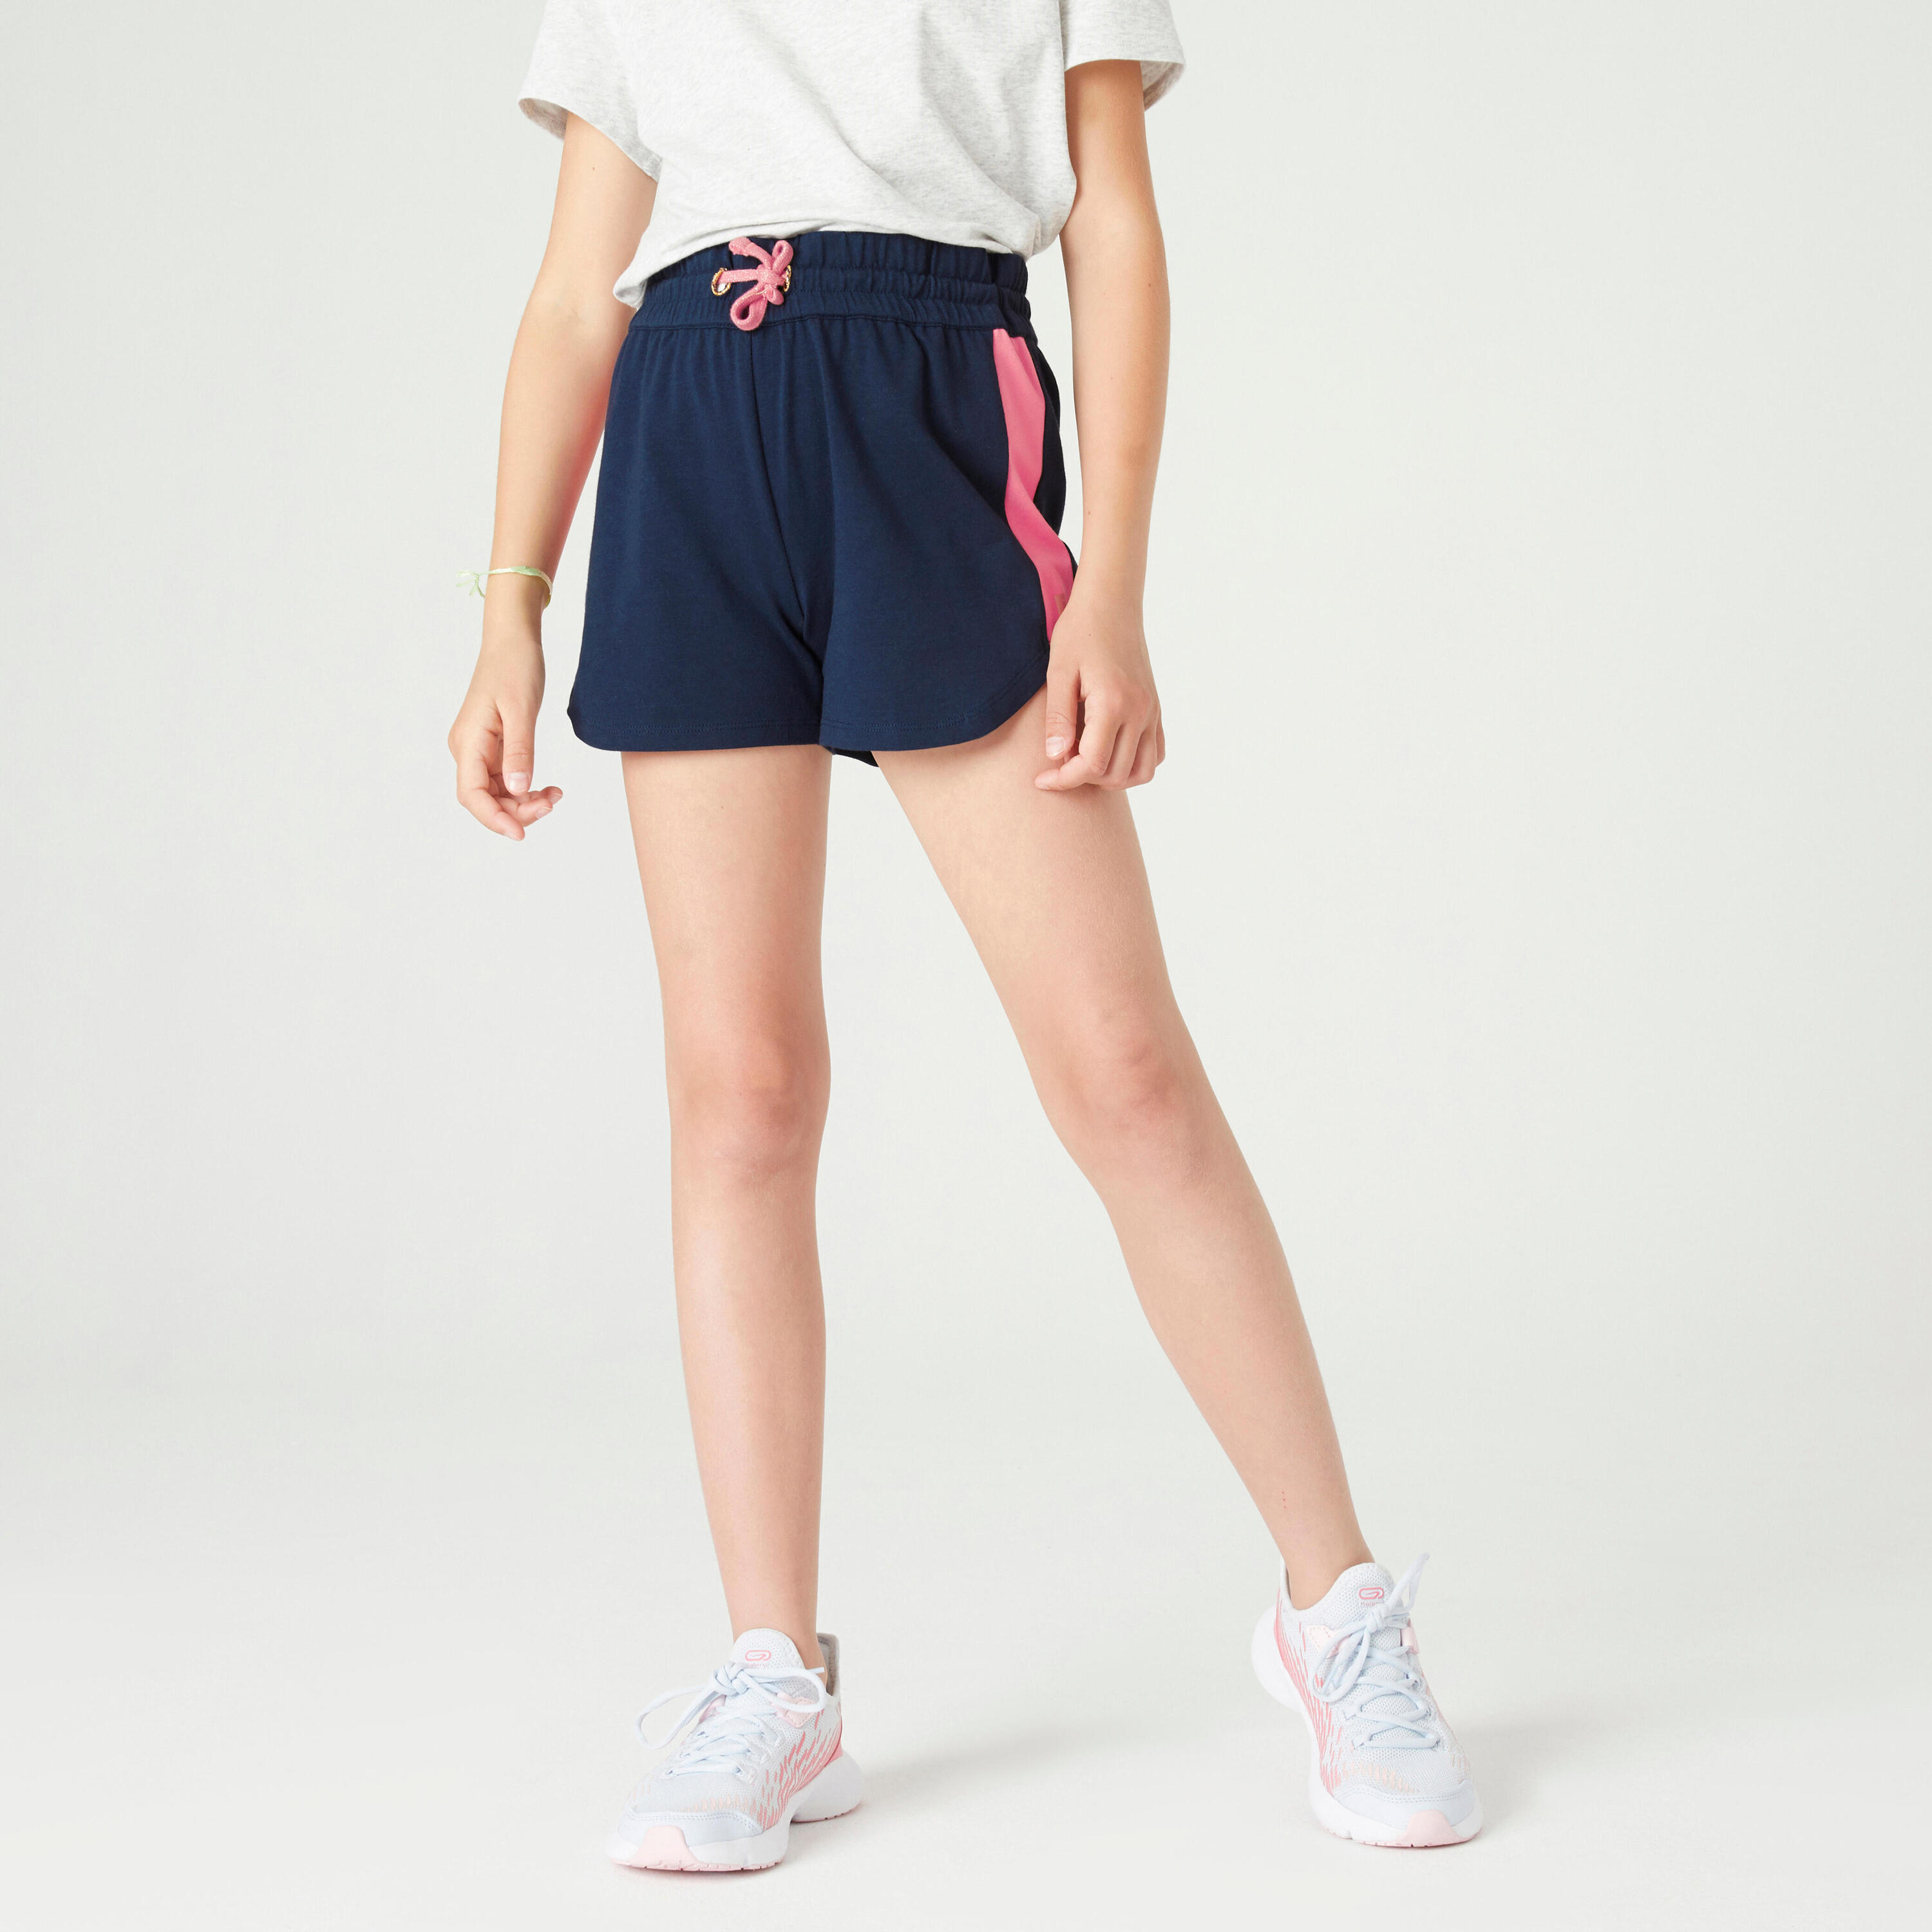 Girls' Cotton Shorts - Navy 1/4